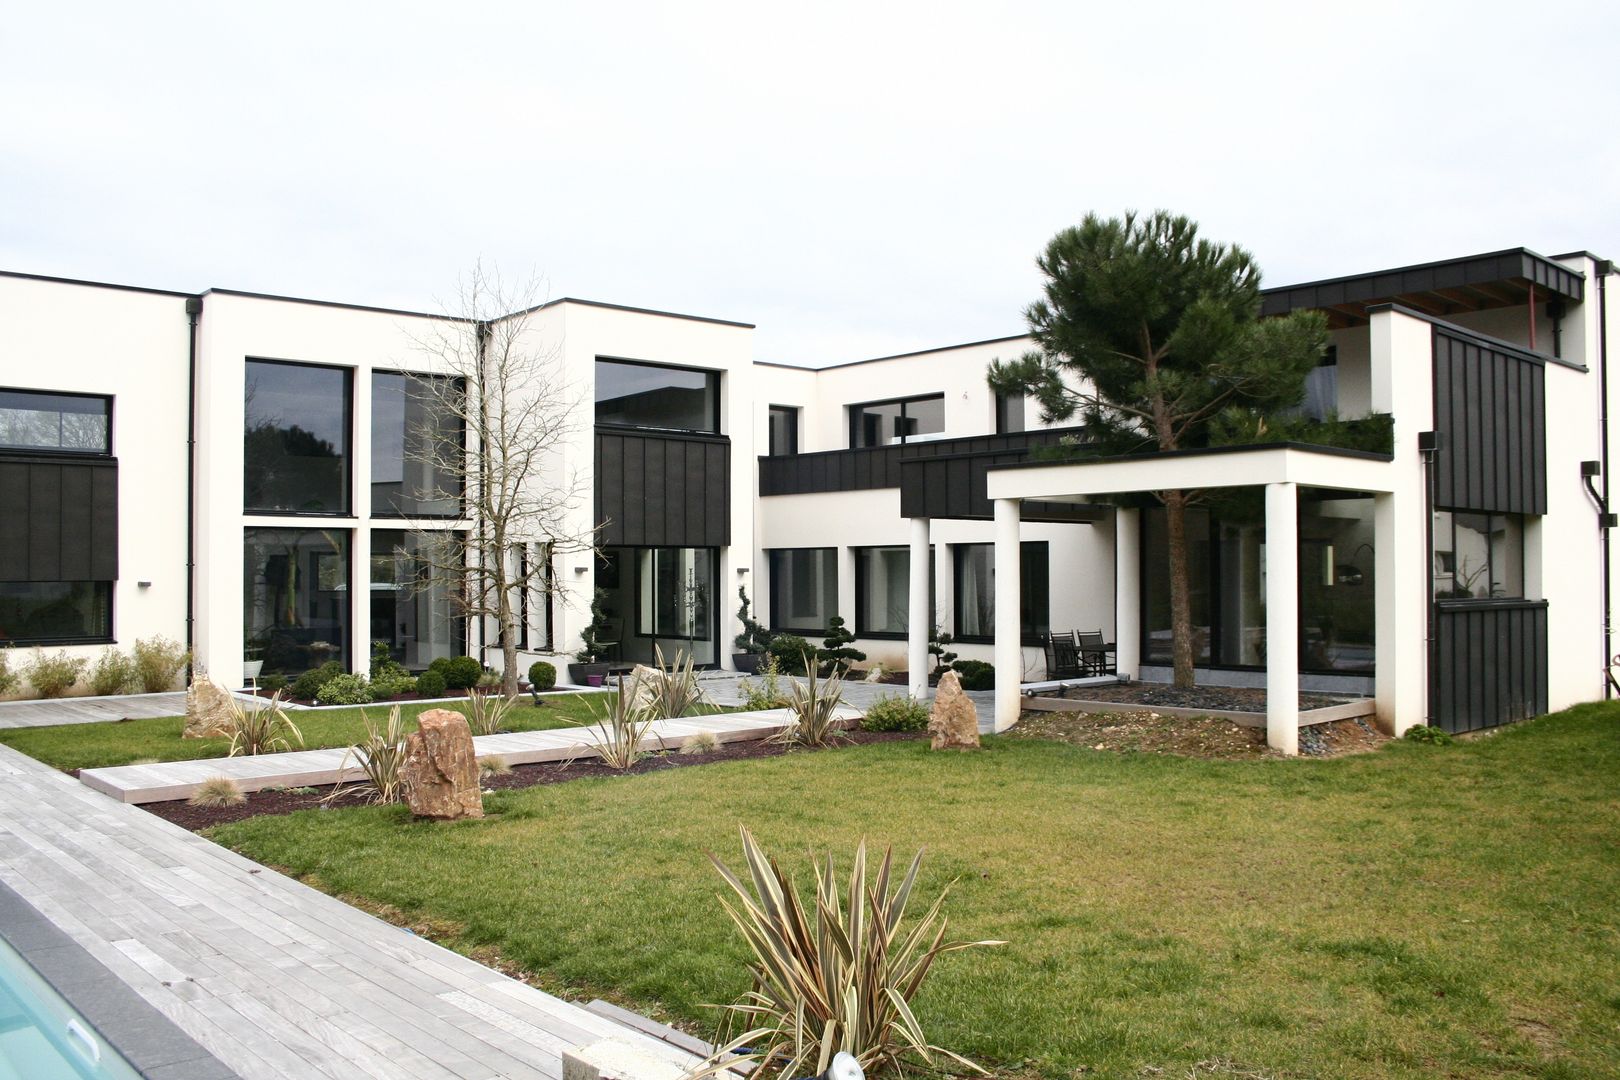 Maison à Campigny (27), scp duchemin melocco architectes scp duchemin melocco architectes Modern Bahçe